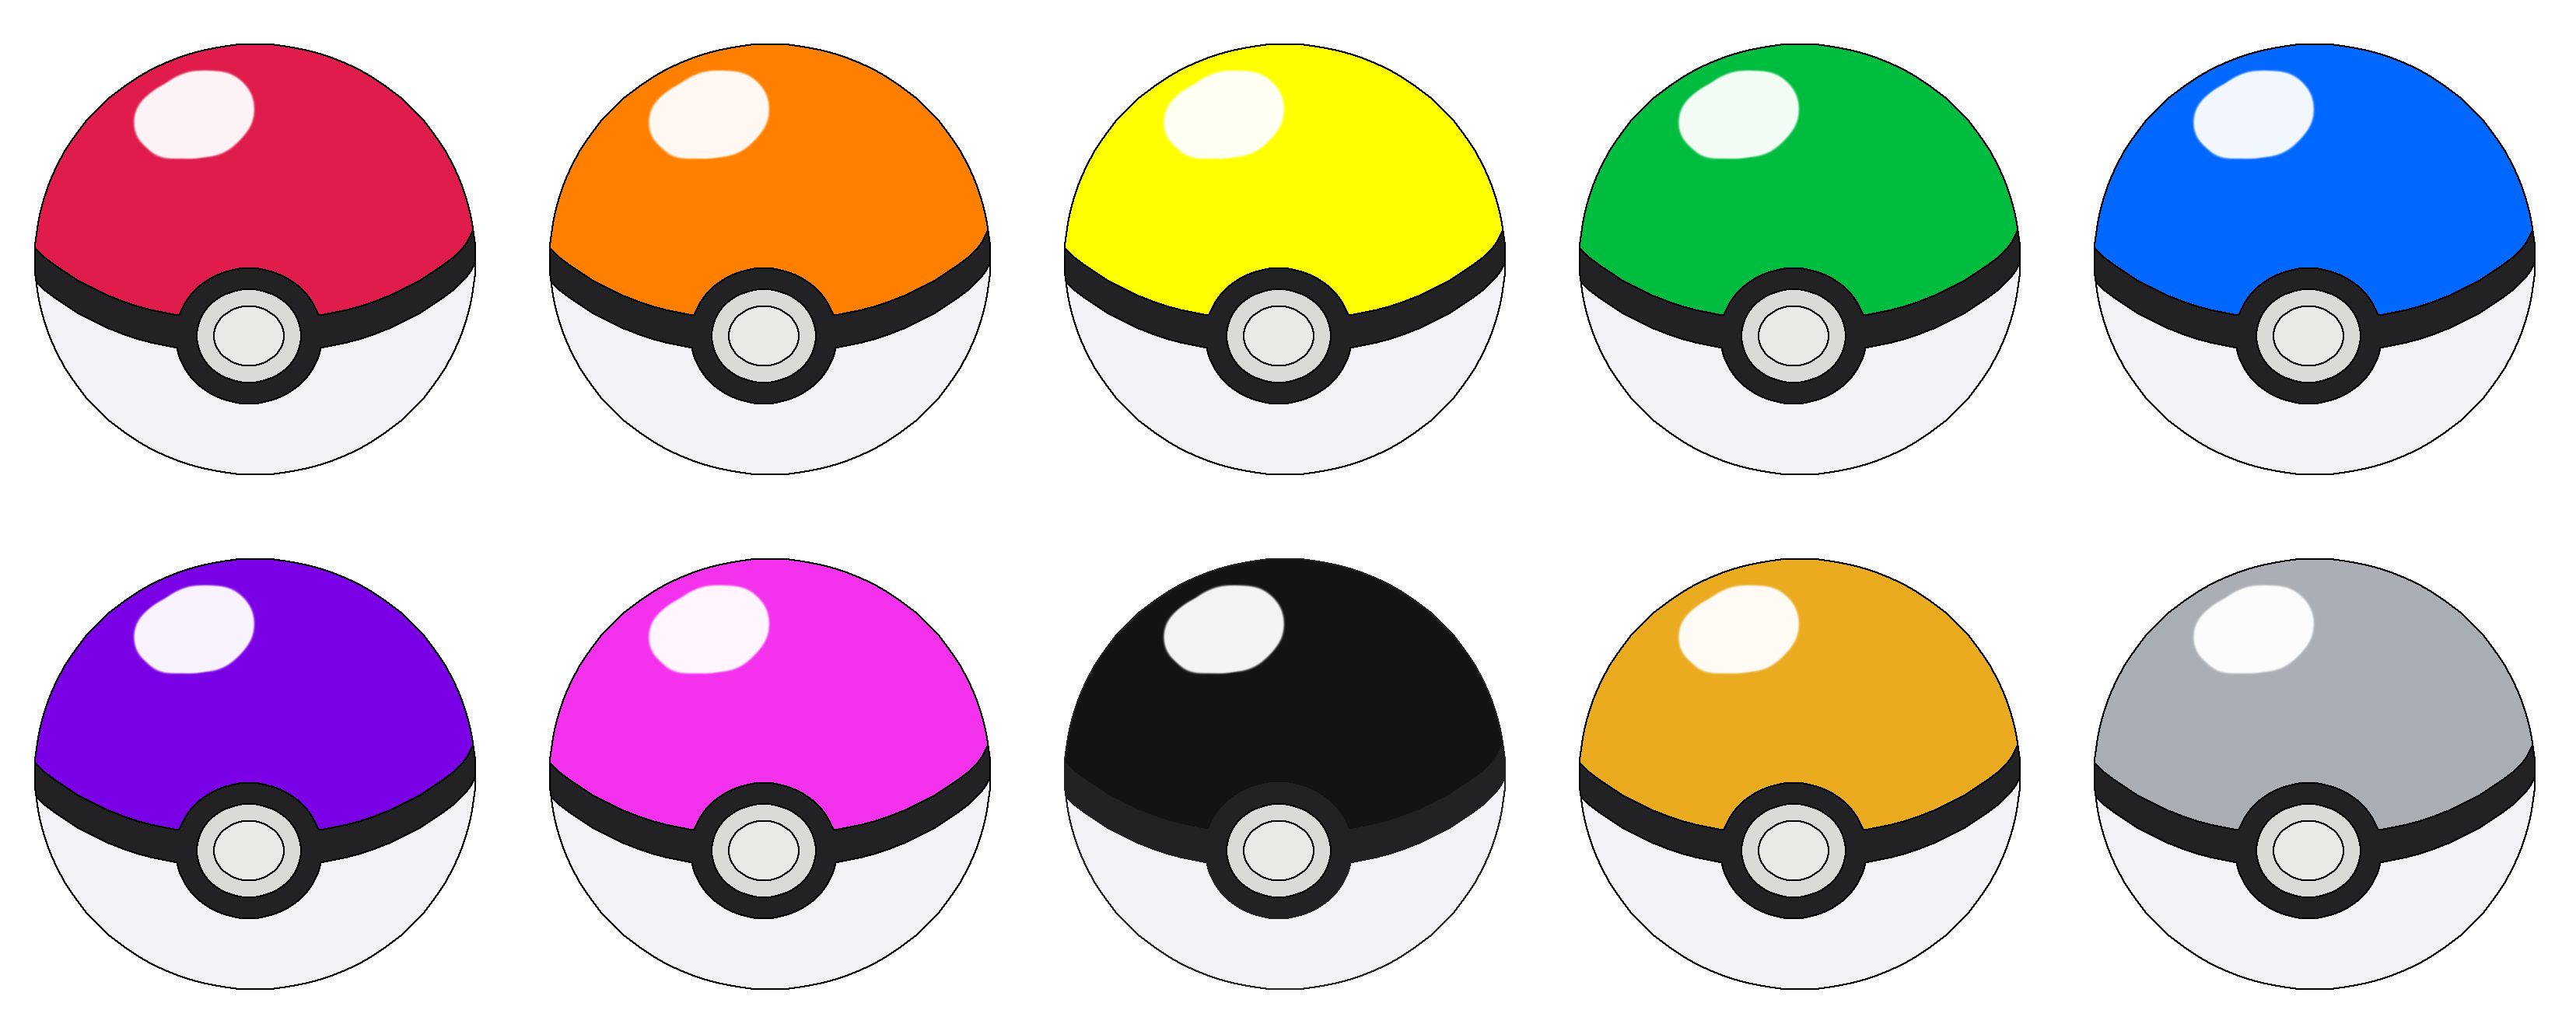 pokemon balls - Google Search  Coloring pages, Pokeball, Deviantart pokemon